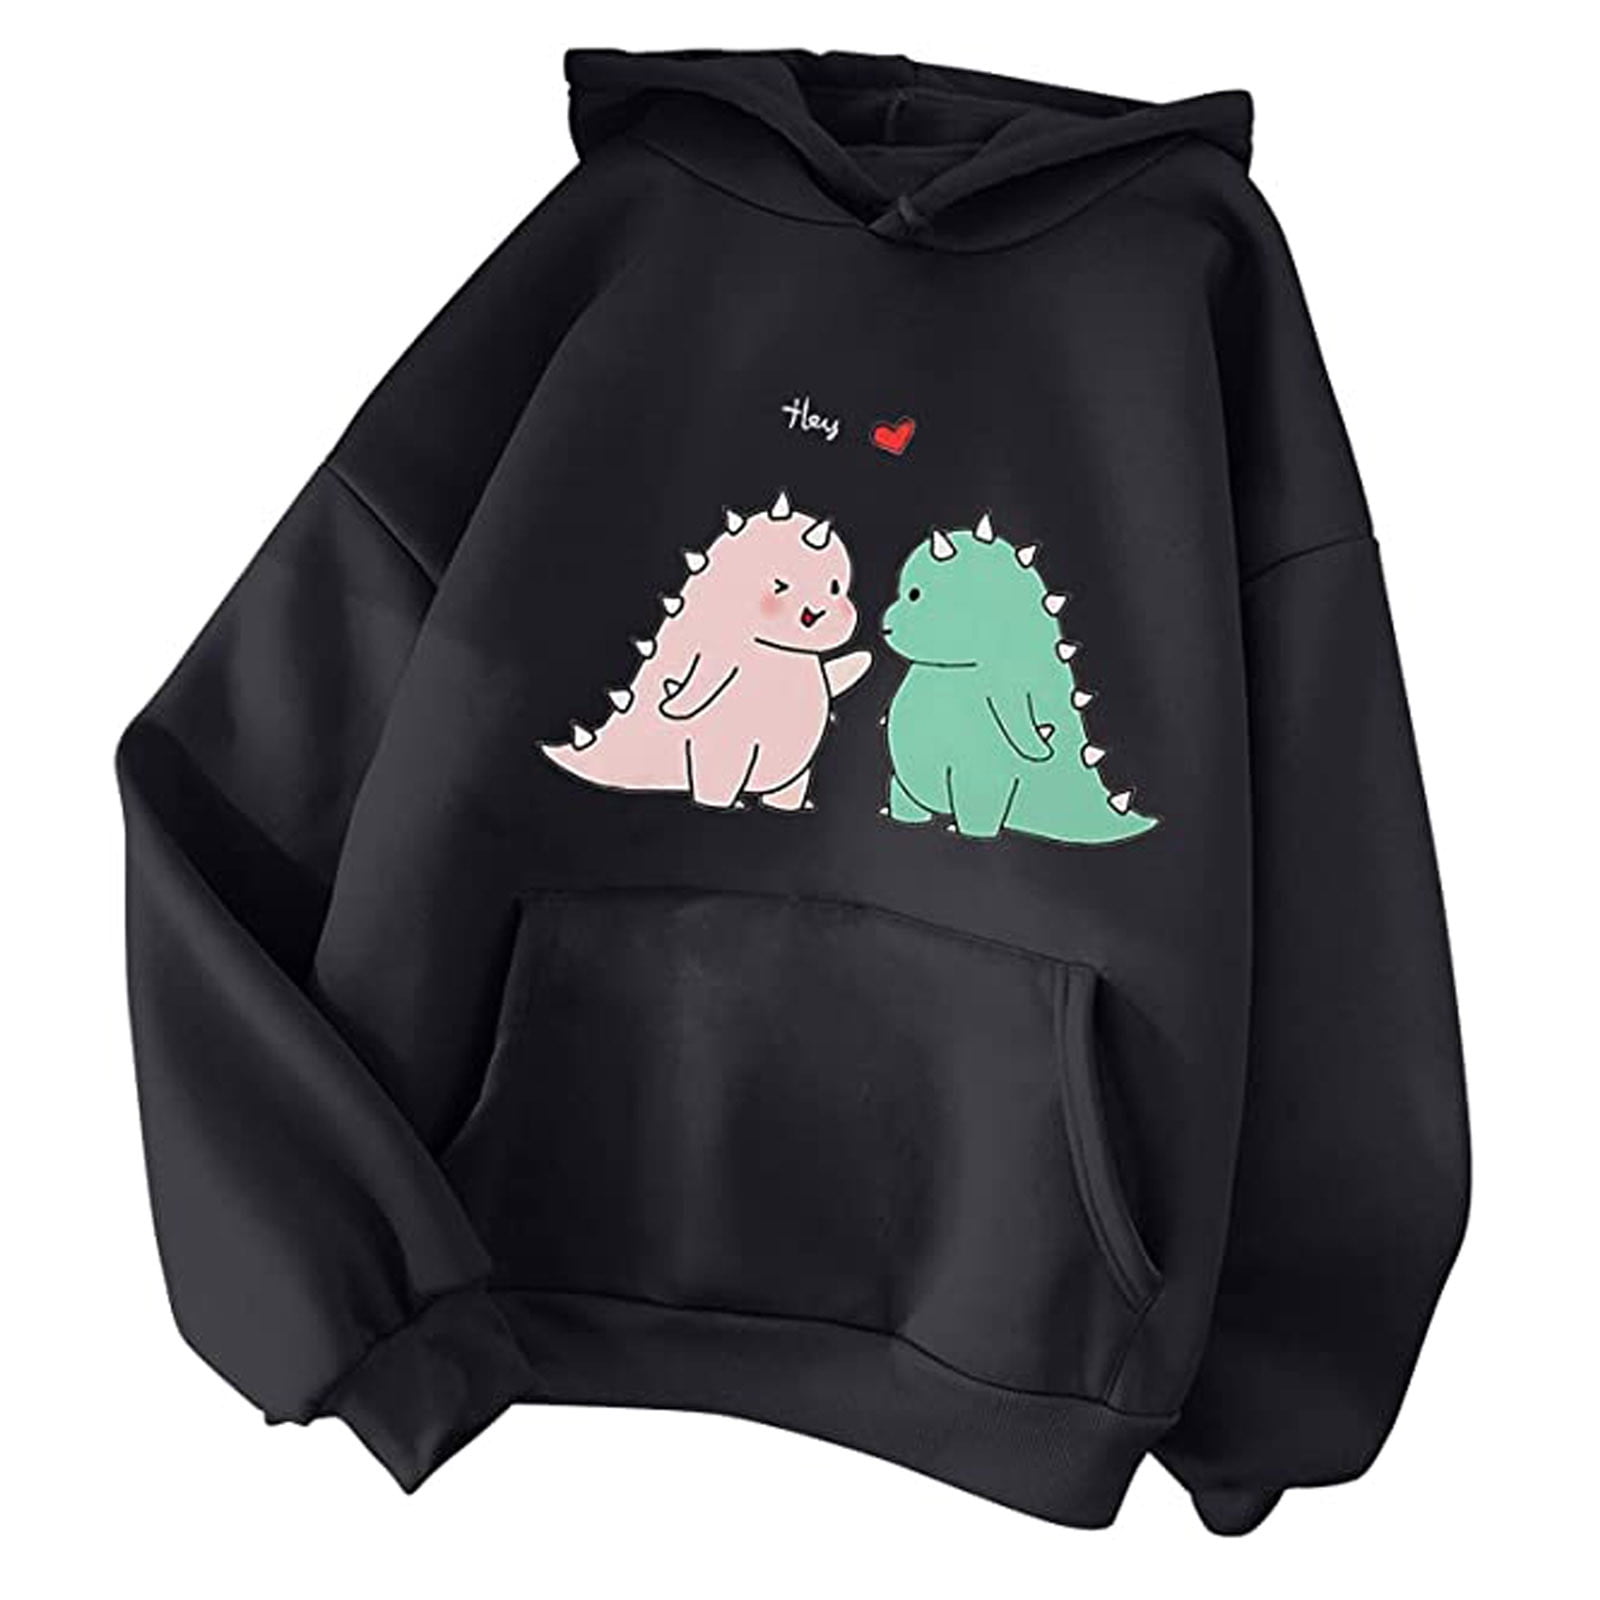 HAPIMO Savings Sweatshirt for Women Pocket Drawstring Pullover Tops Cute  Animal Graphic Print Long Sleeve Relaxed Fit Womens Hoodie Sweatshirt Teen  Girls Clothes Gray S 